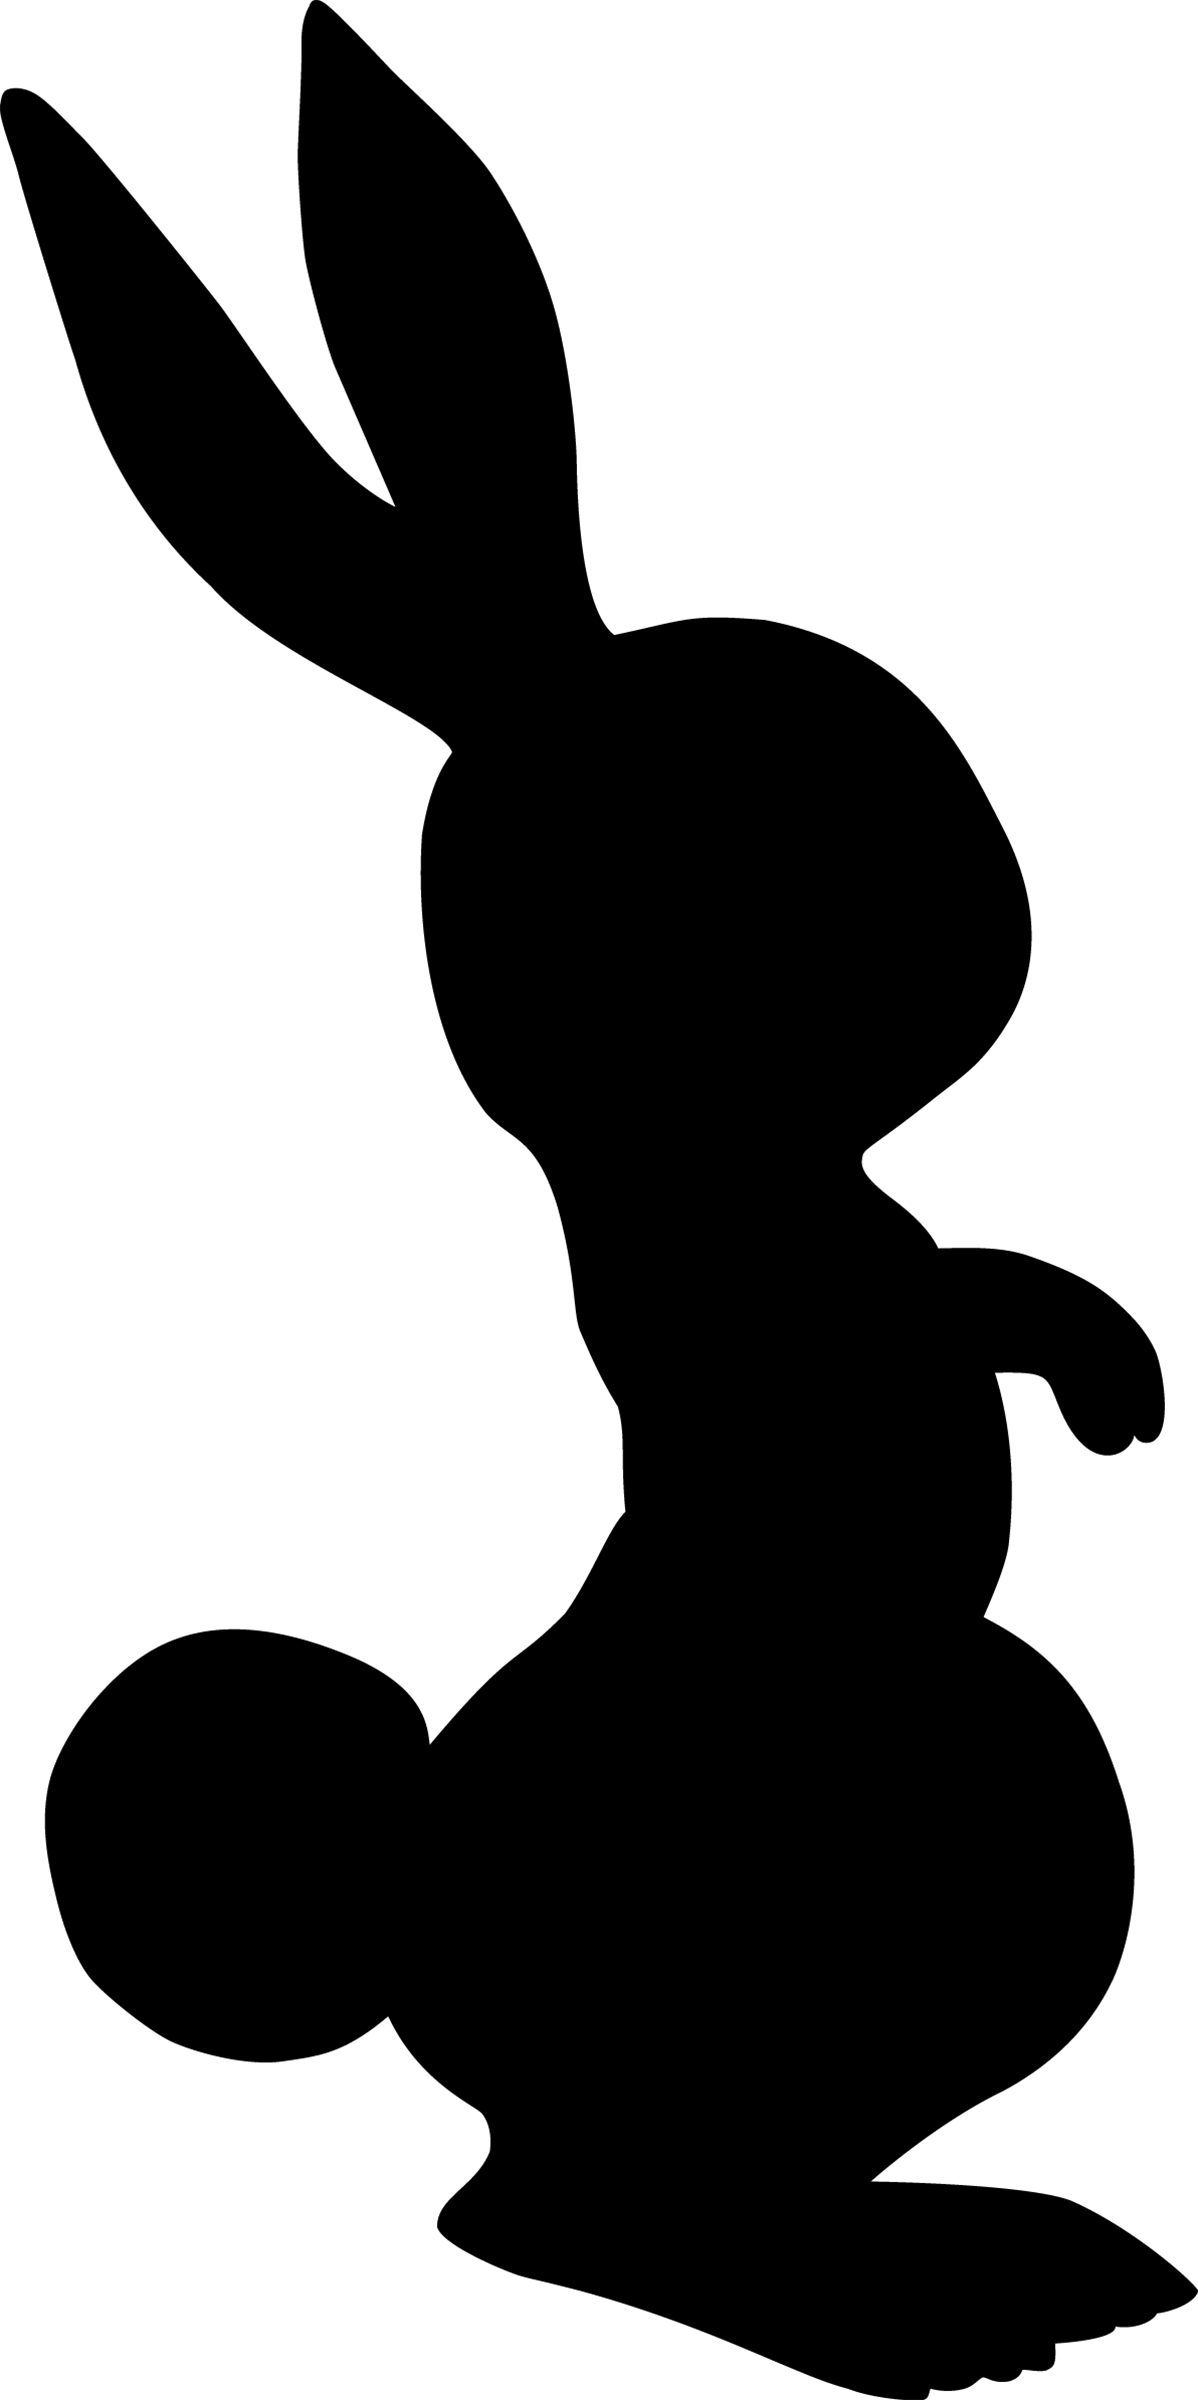  bunny rabbit silhouettes. Bunnies clipart silhouette